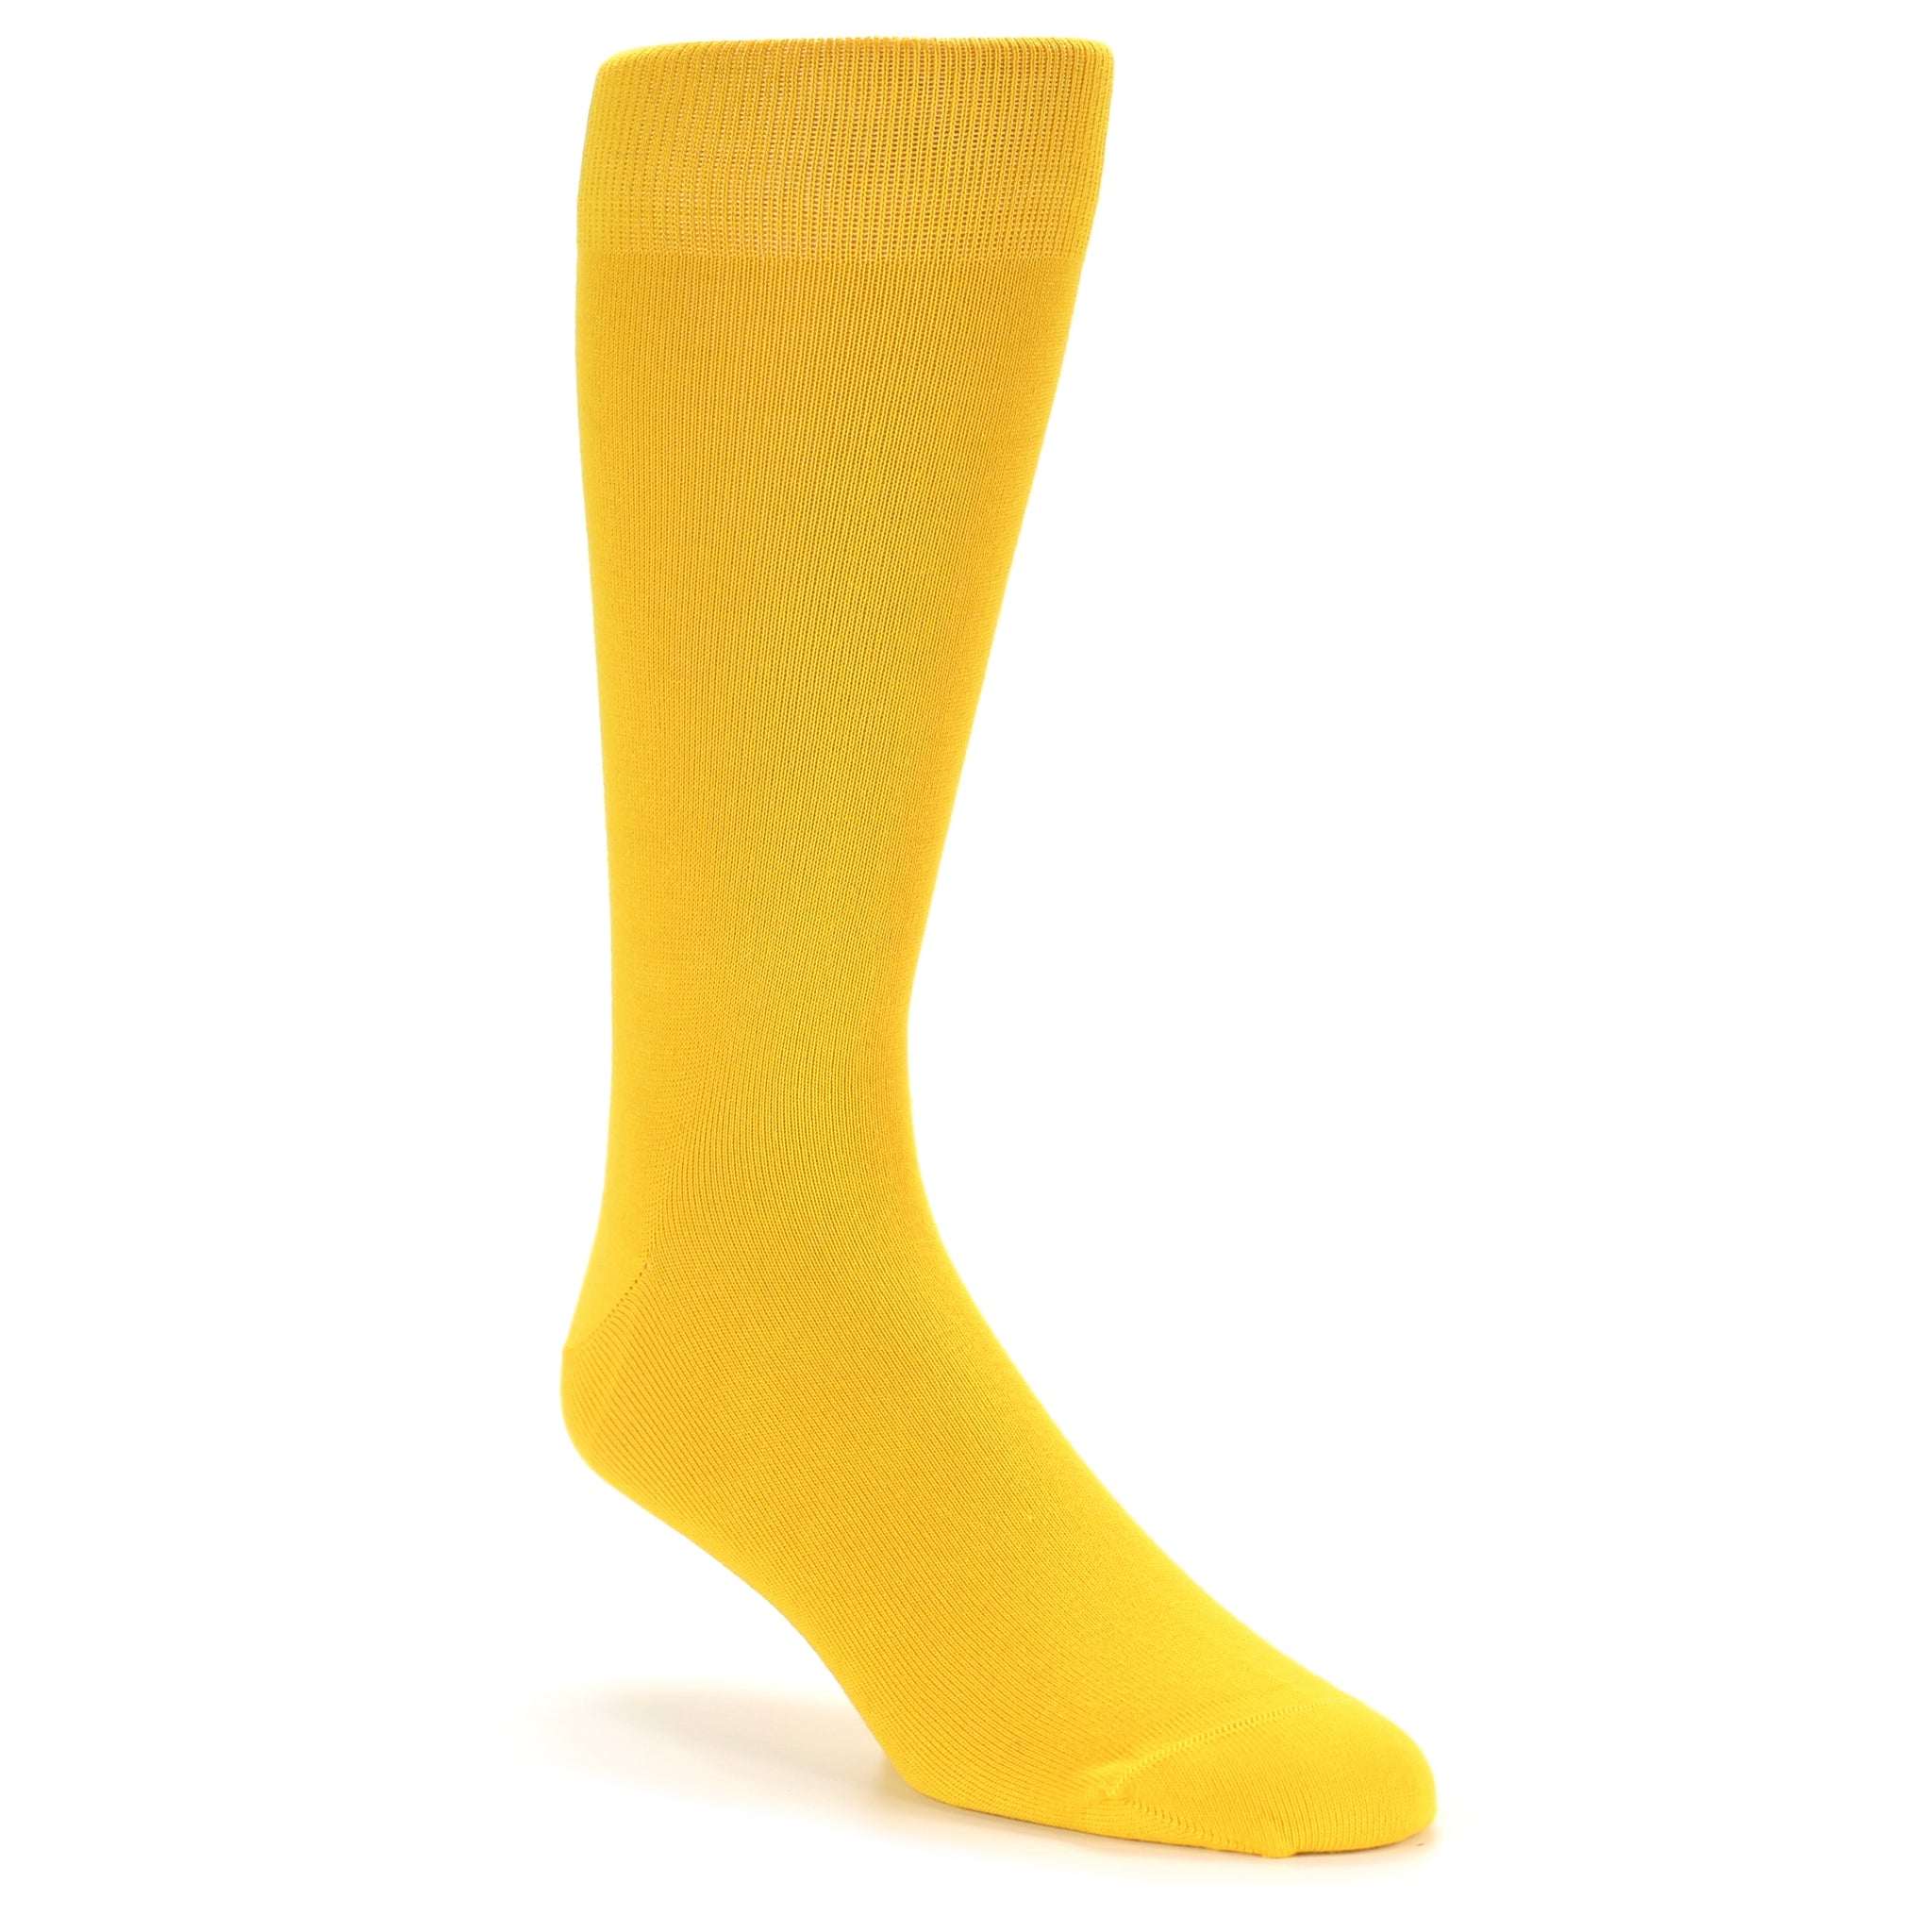 Golden Yellow Solid Color Socks - Men's Dress Socks